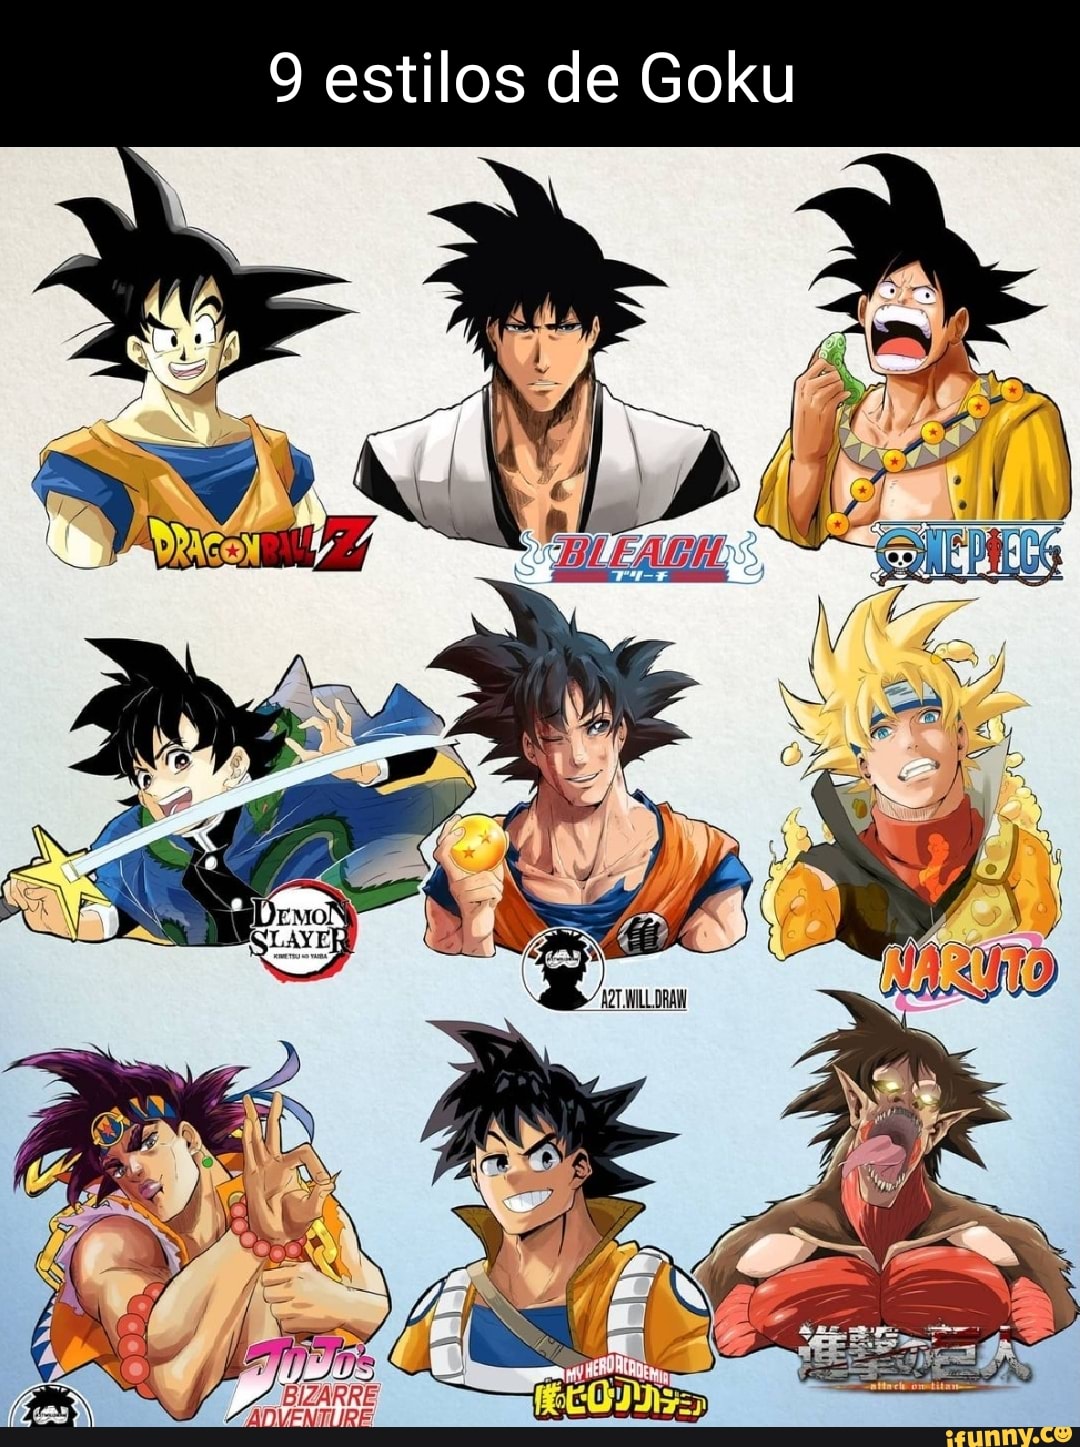 Komix Brasil: Son Goku